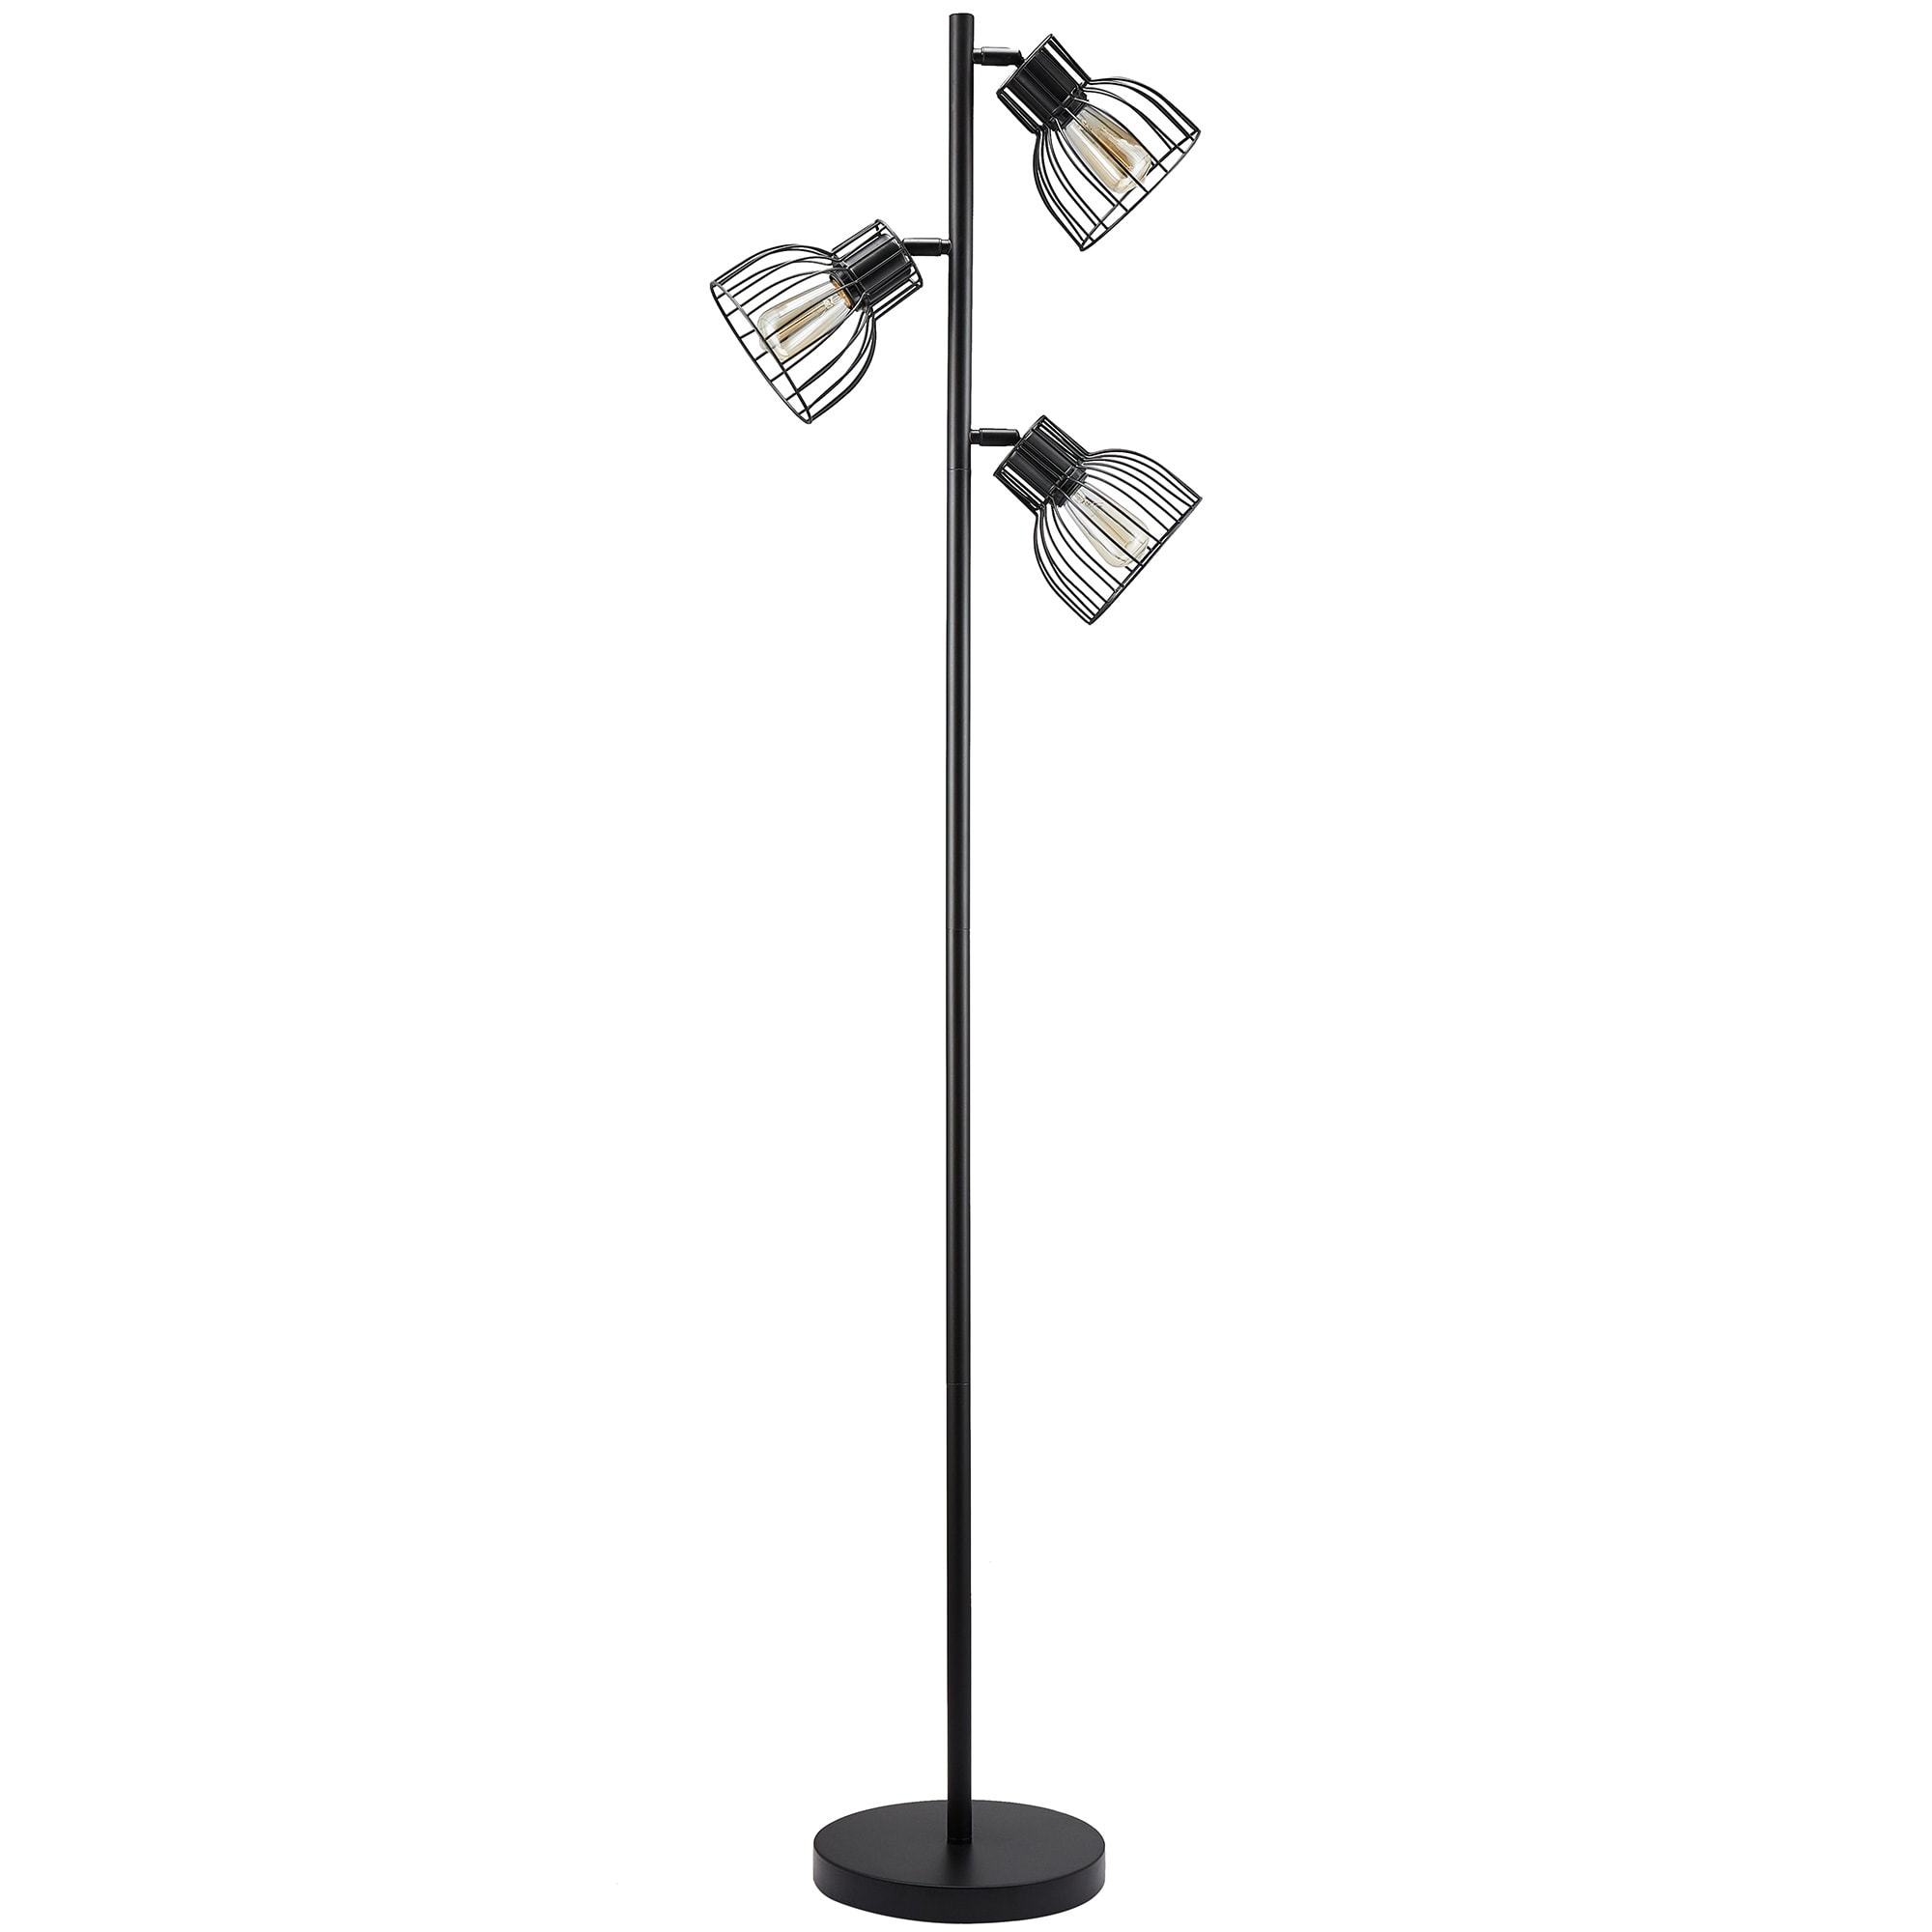 Rustic Floor Lamp Industrial Style 3-Head Torchiere Lamp Fixture 3 Bulbs Included LEONLITE 65inch Track Tree Floor Lamp 